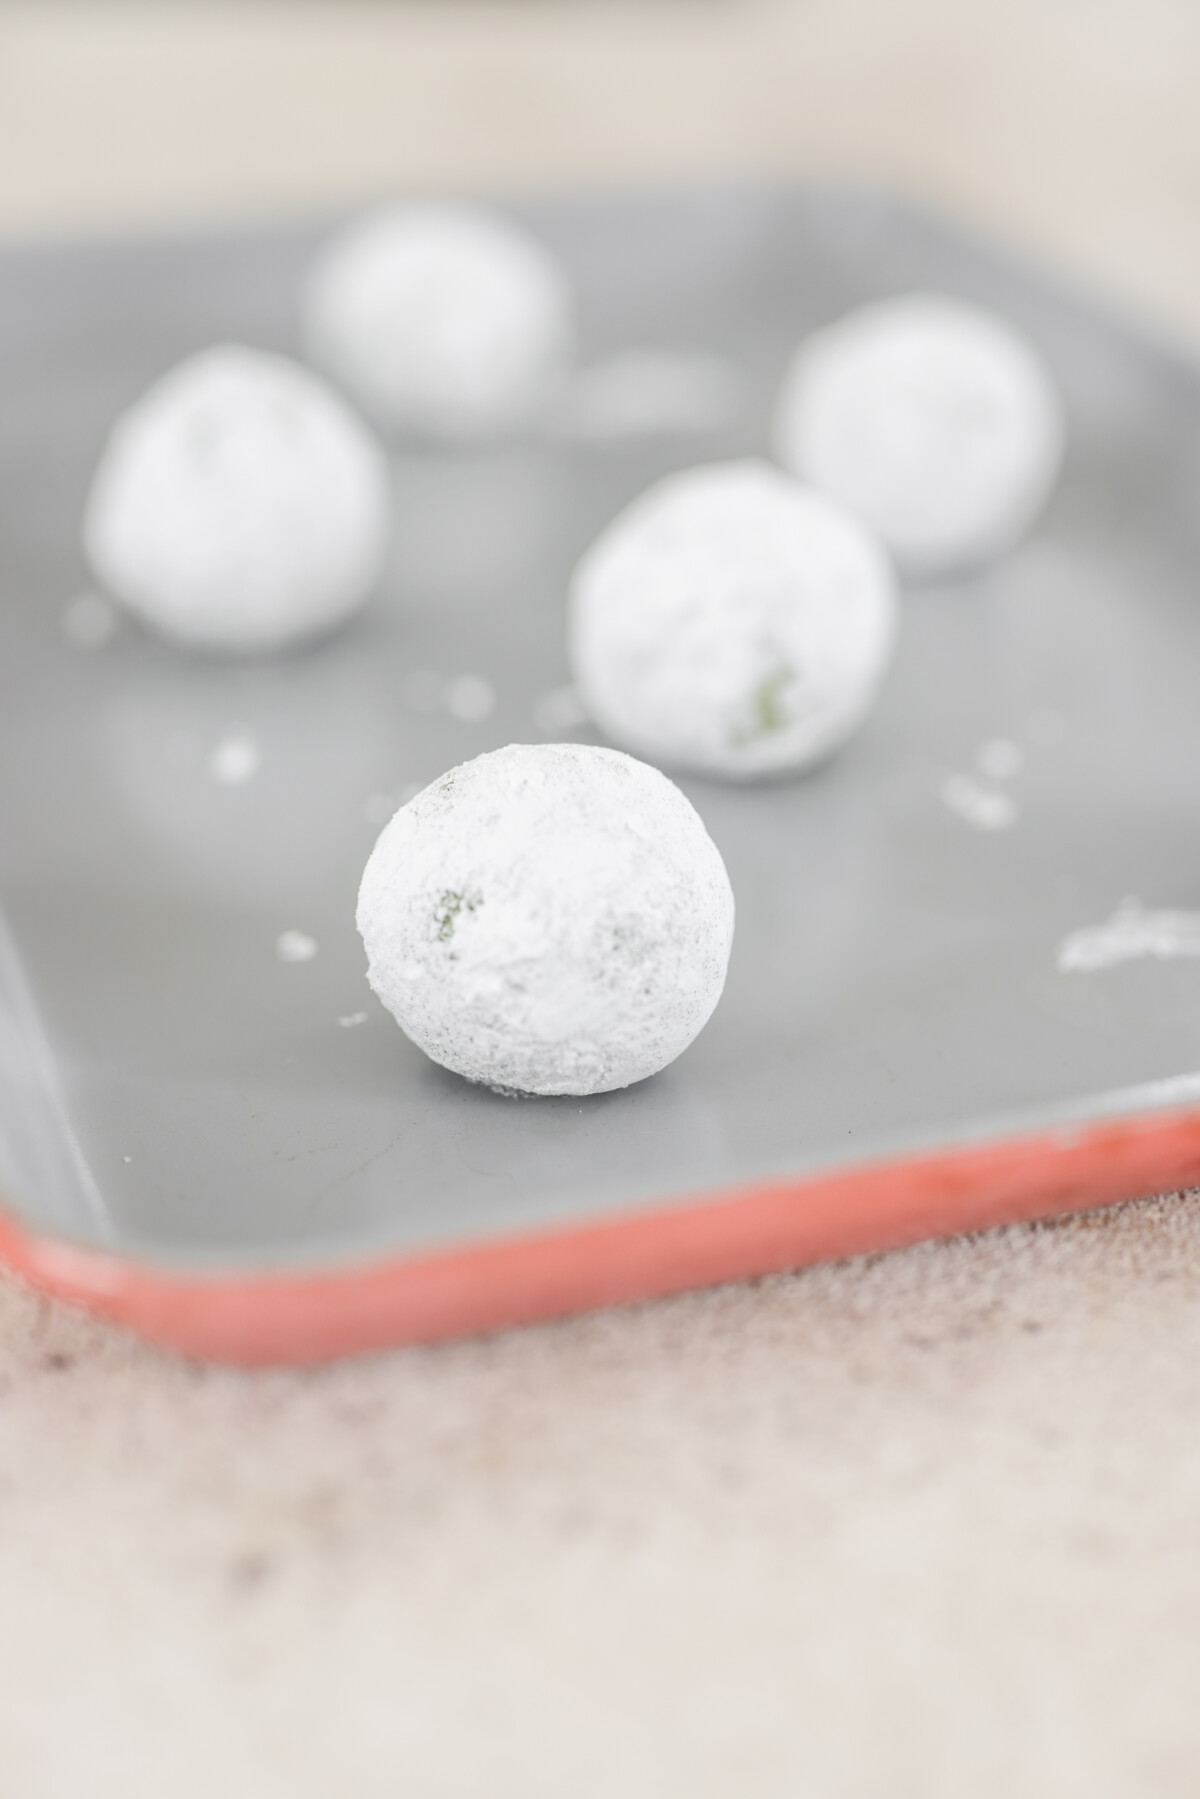 powdered sugar cookie dough balls on a baking sheet 